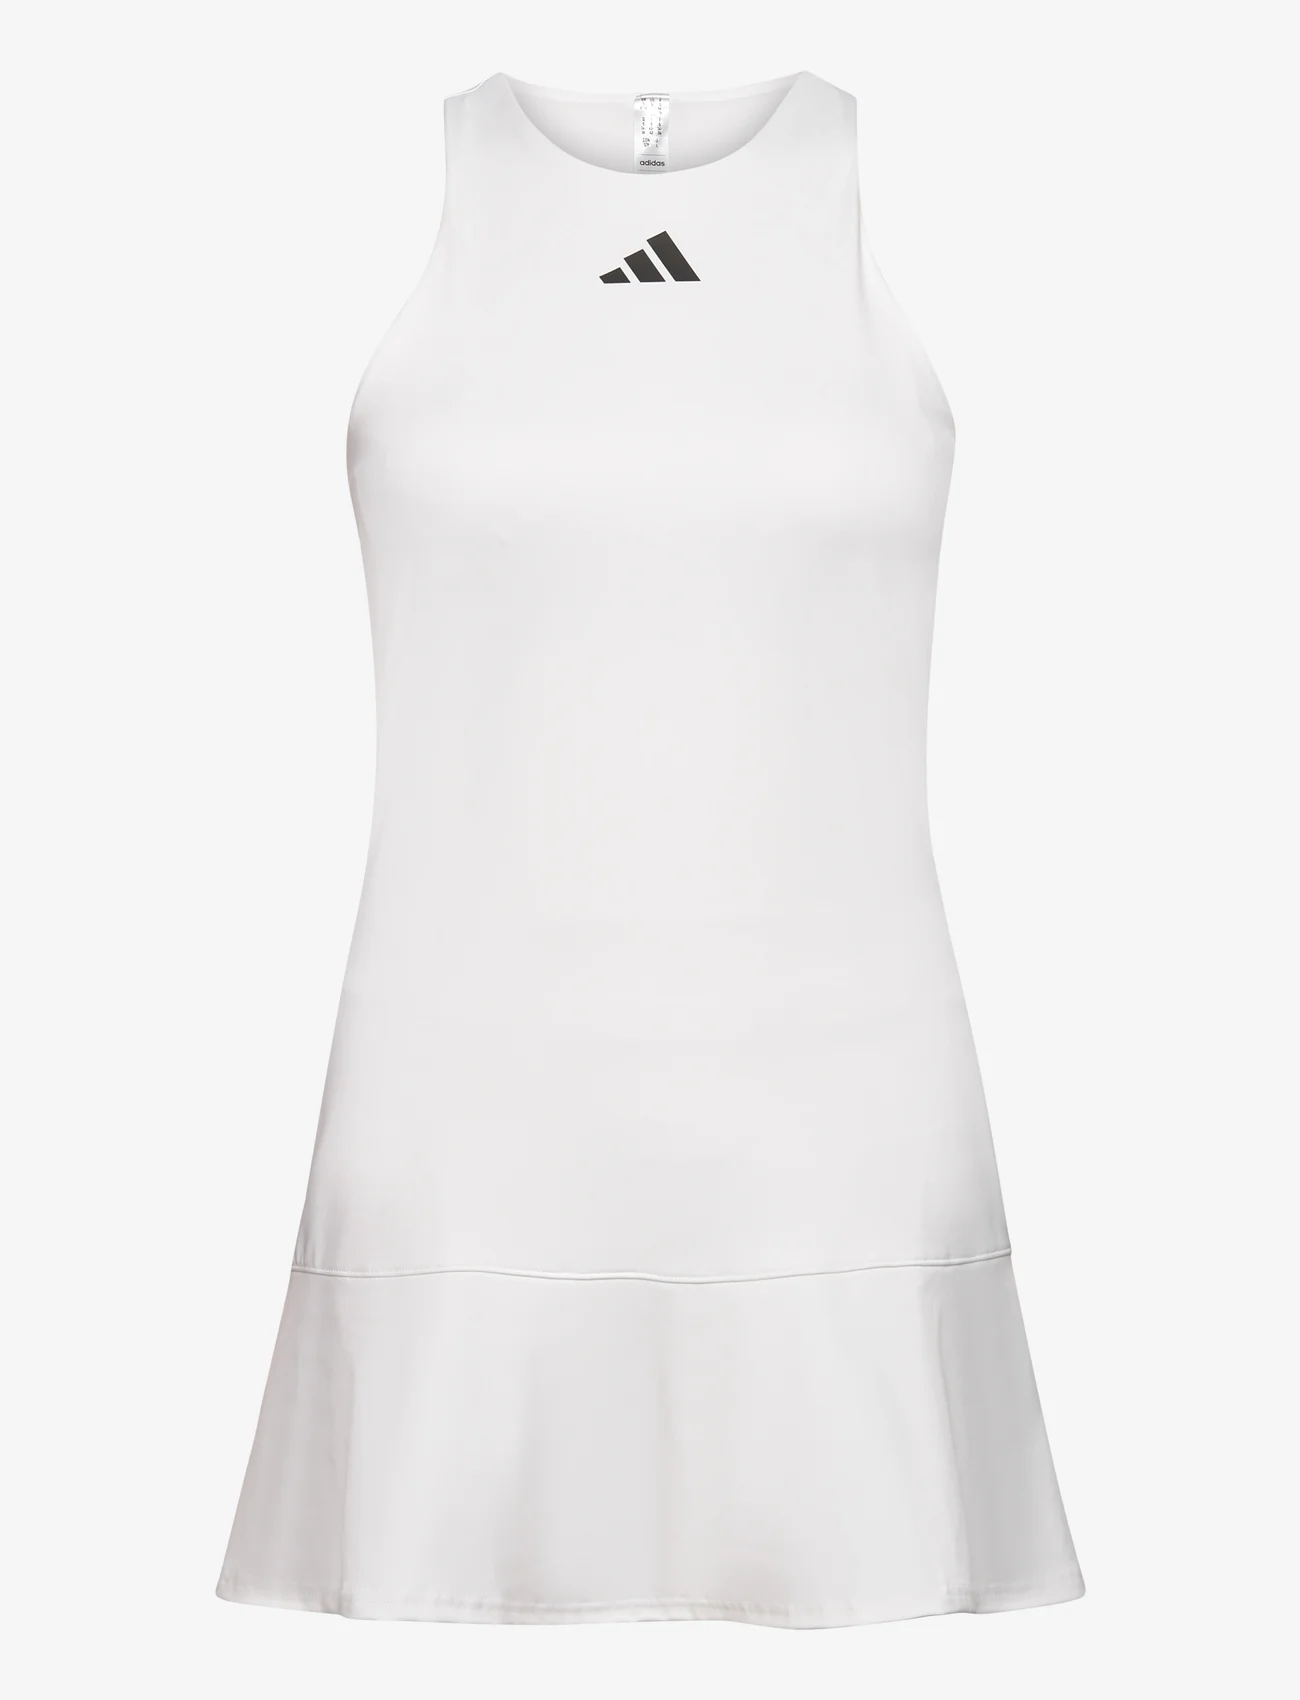 adidas Performance - Y-DRESS - sportieve jurken - 000/white - 0